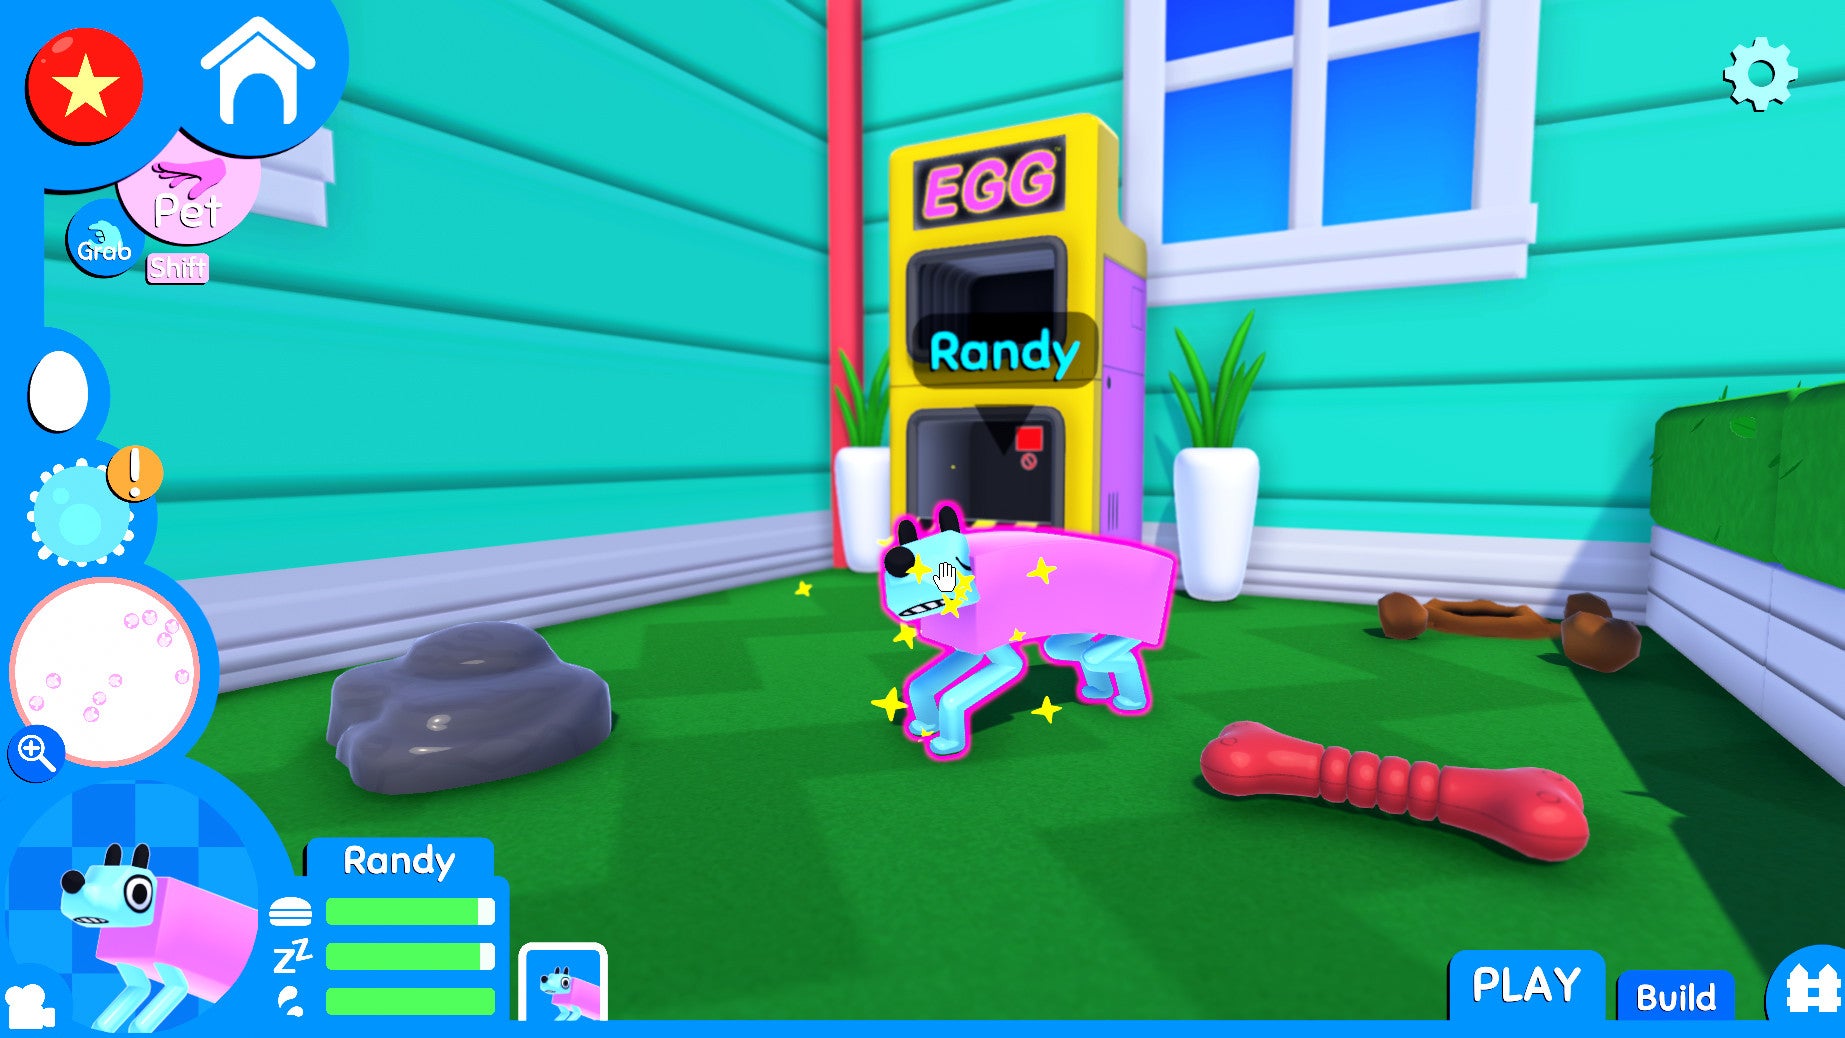 A screenshot of Wobbledogs, showing a pink rectangular dog called Randy getting a nice pat.